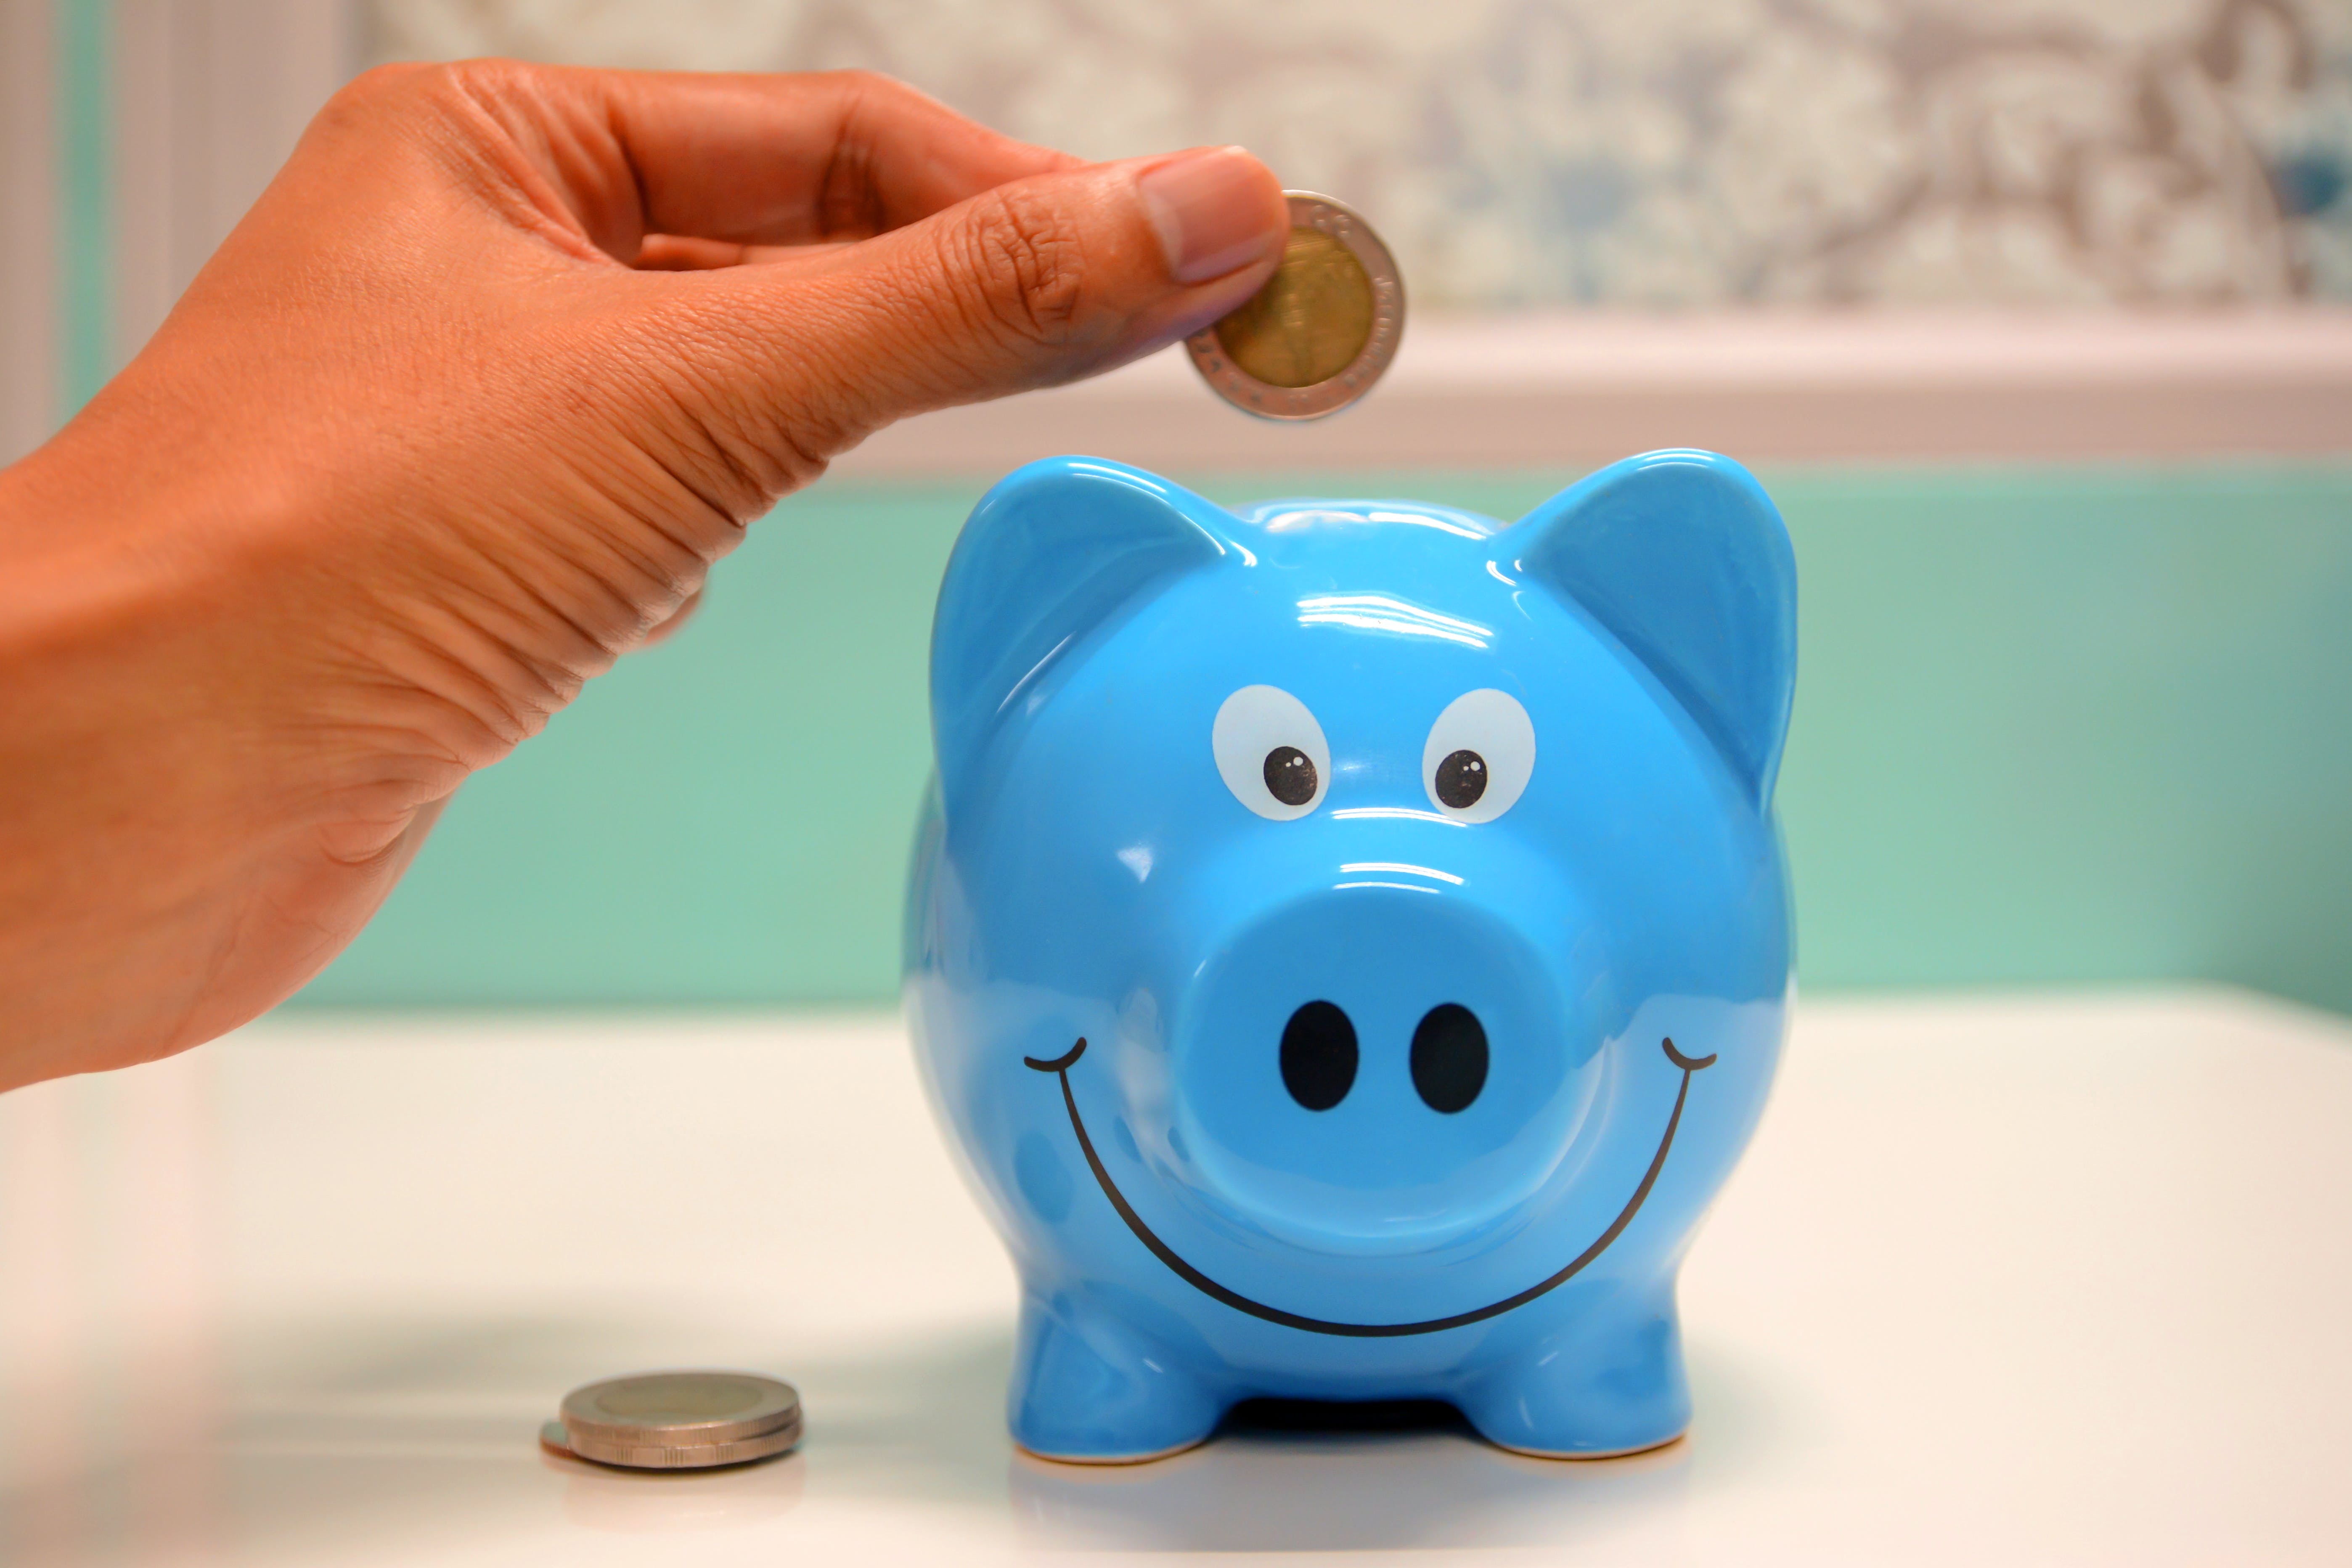 A hand depositing a coin into a piggy bank